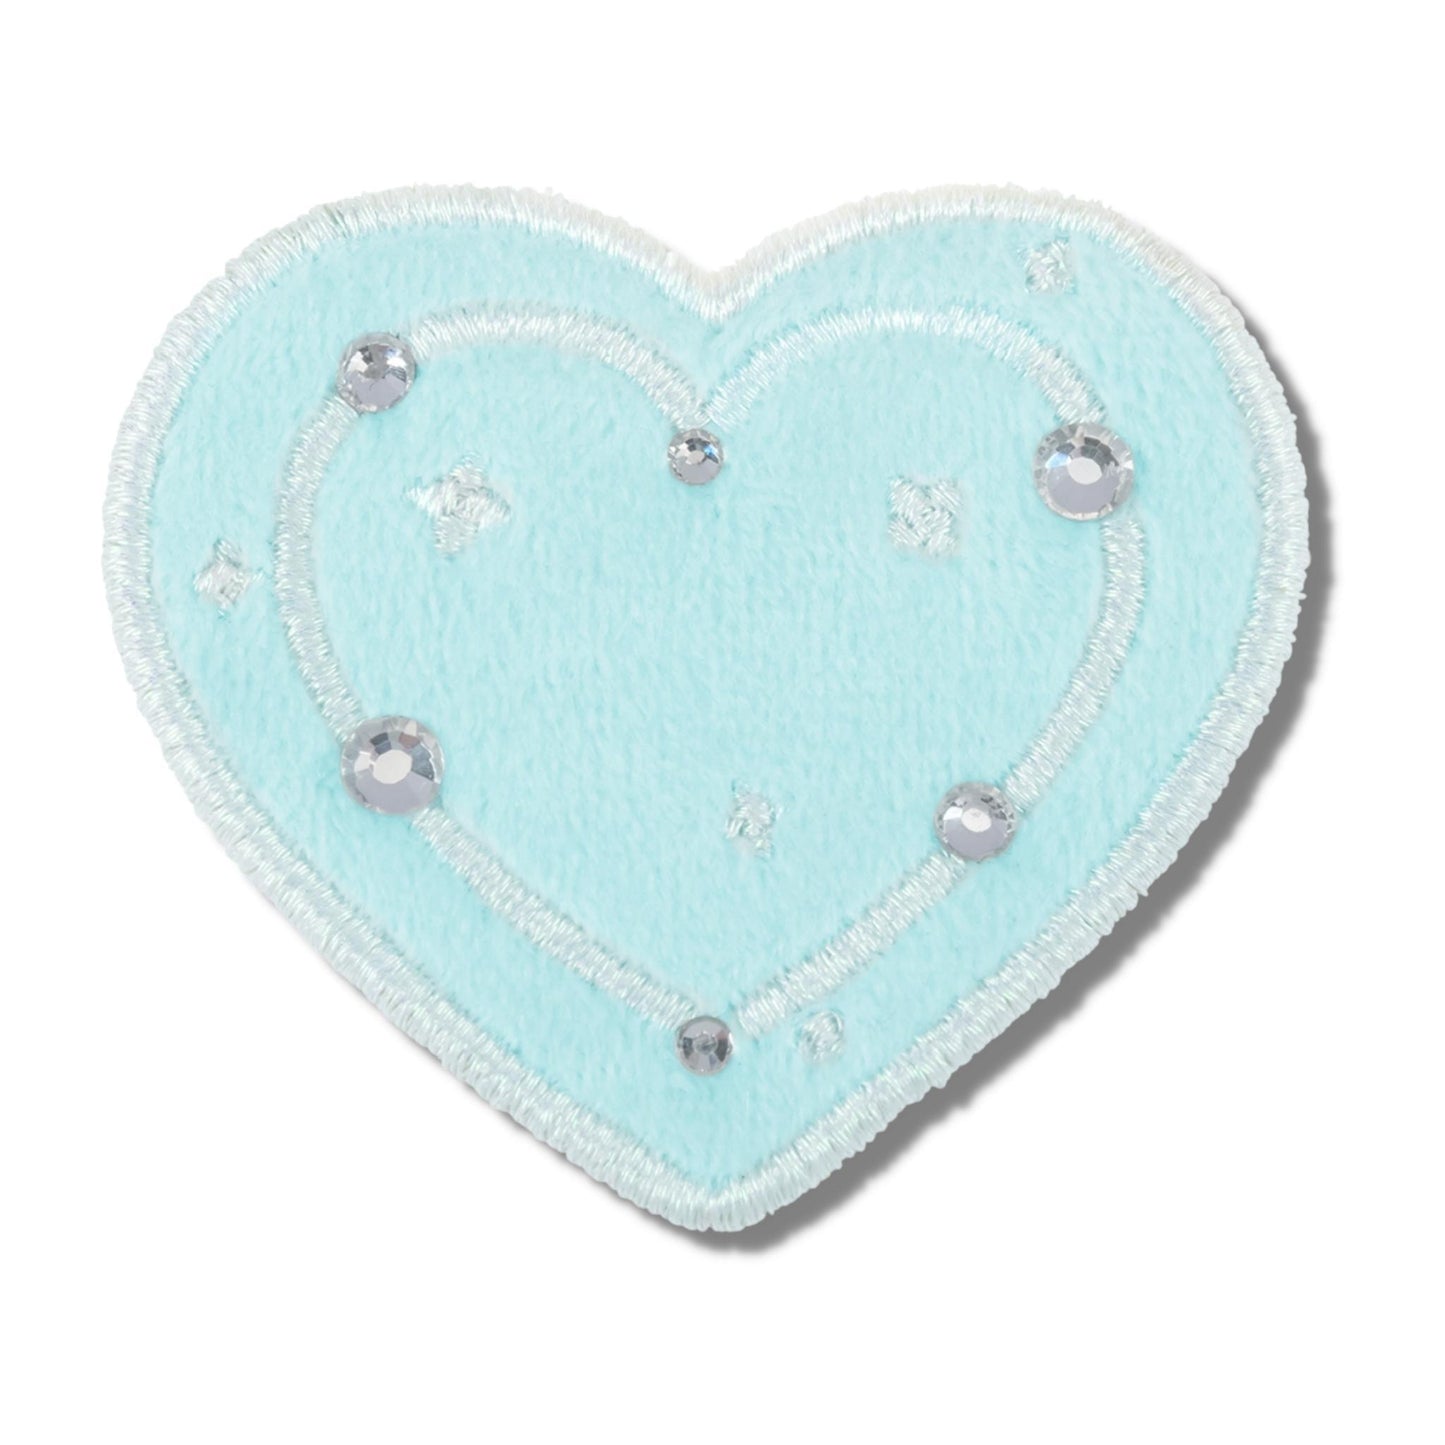 SCLN Heart Velvet Patch - a Spirit Animal - Patches Clover handbags-accessories handbags-accressories